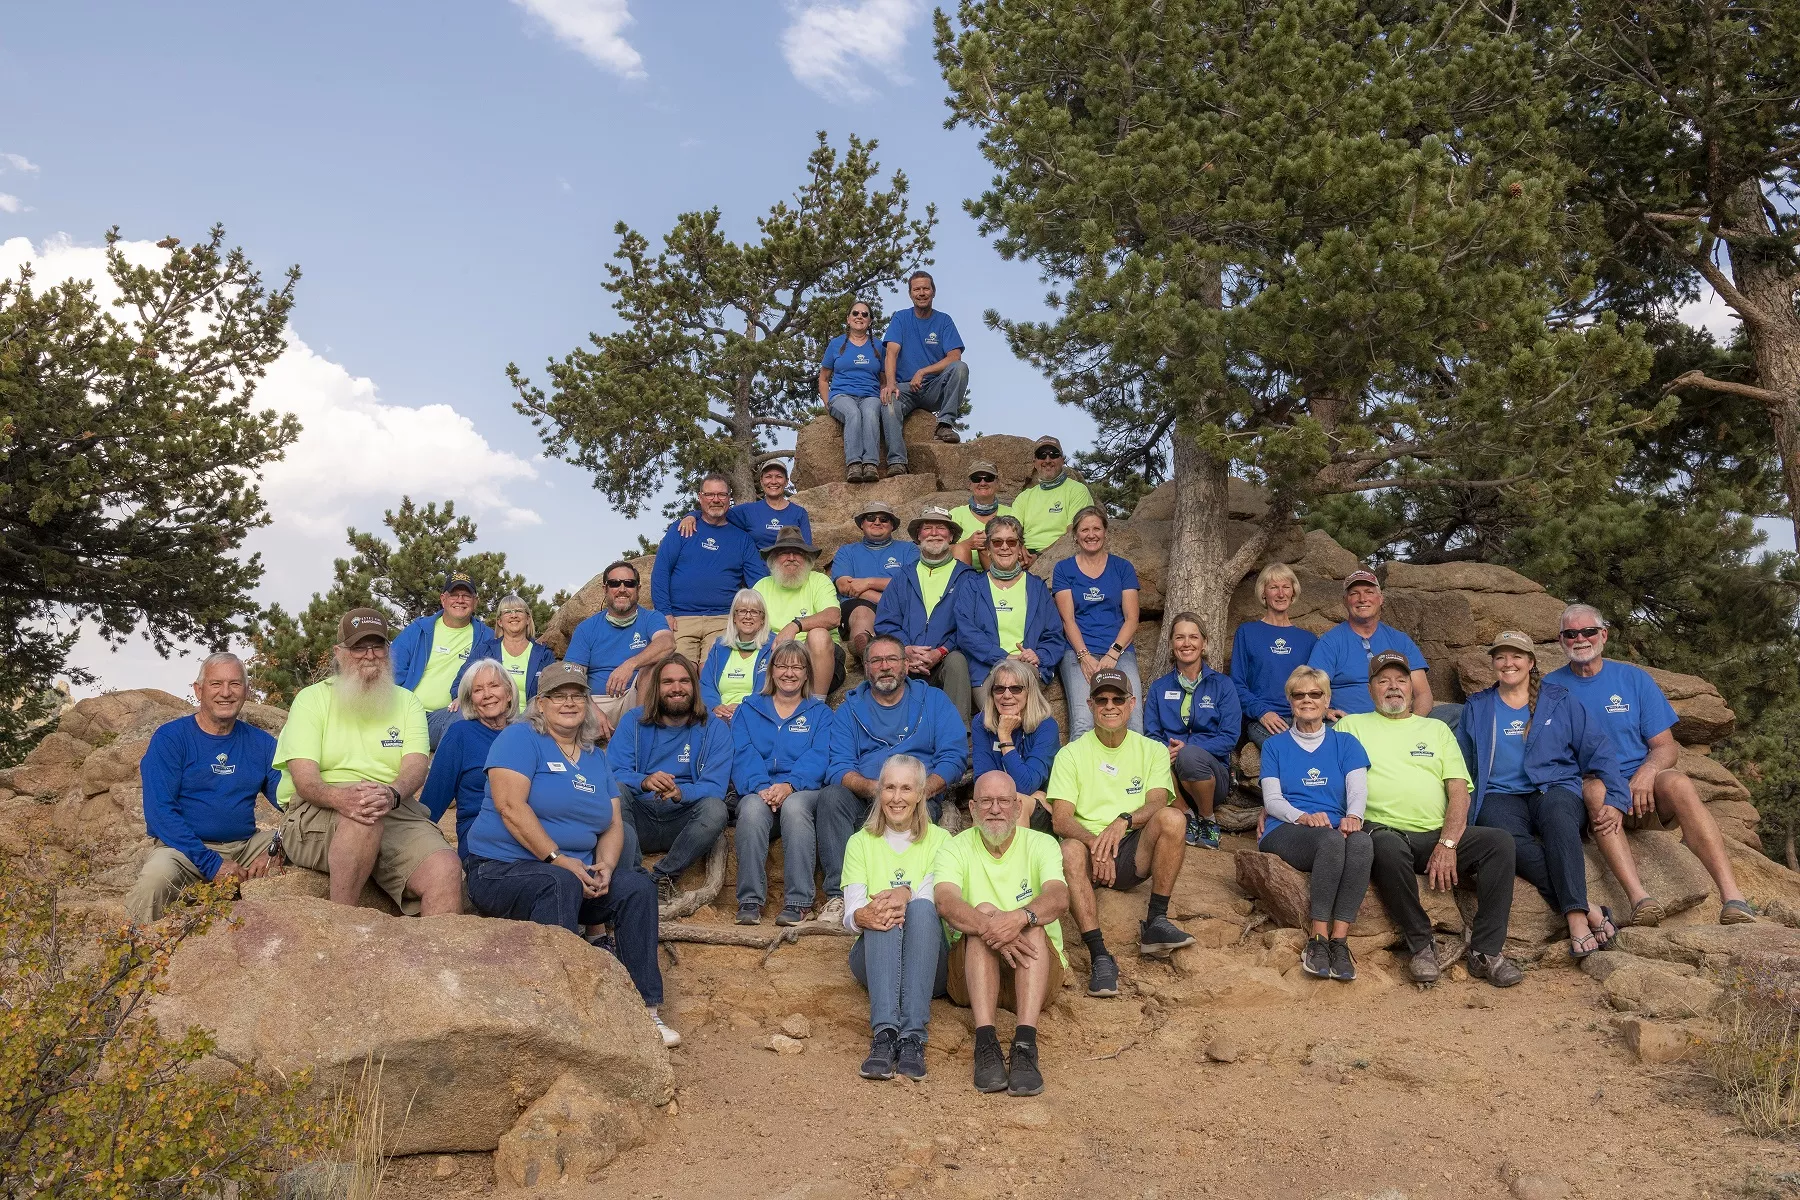 2020 Campground Staff Photo